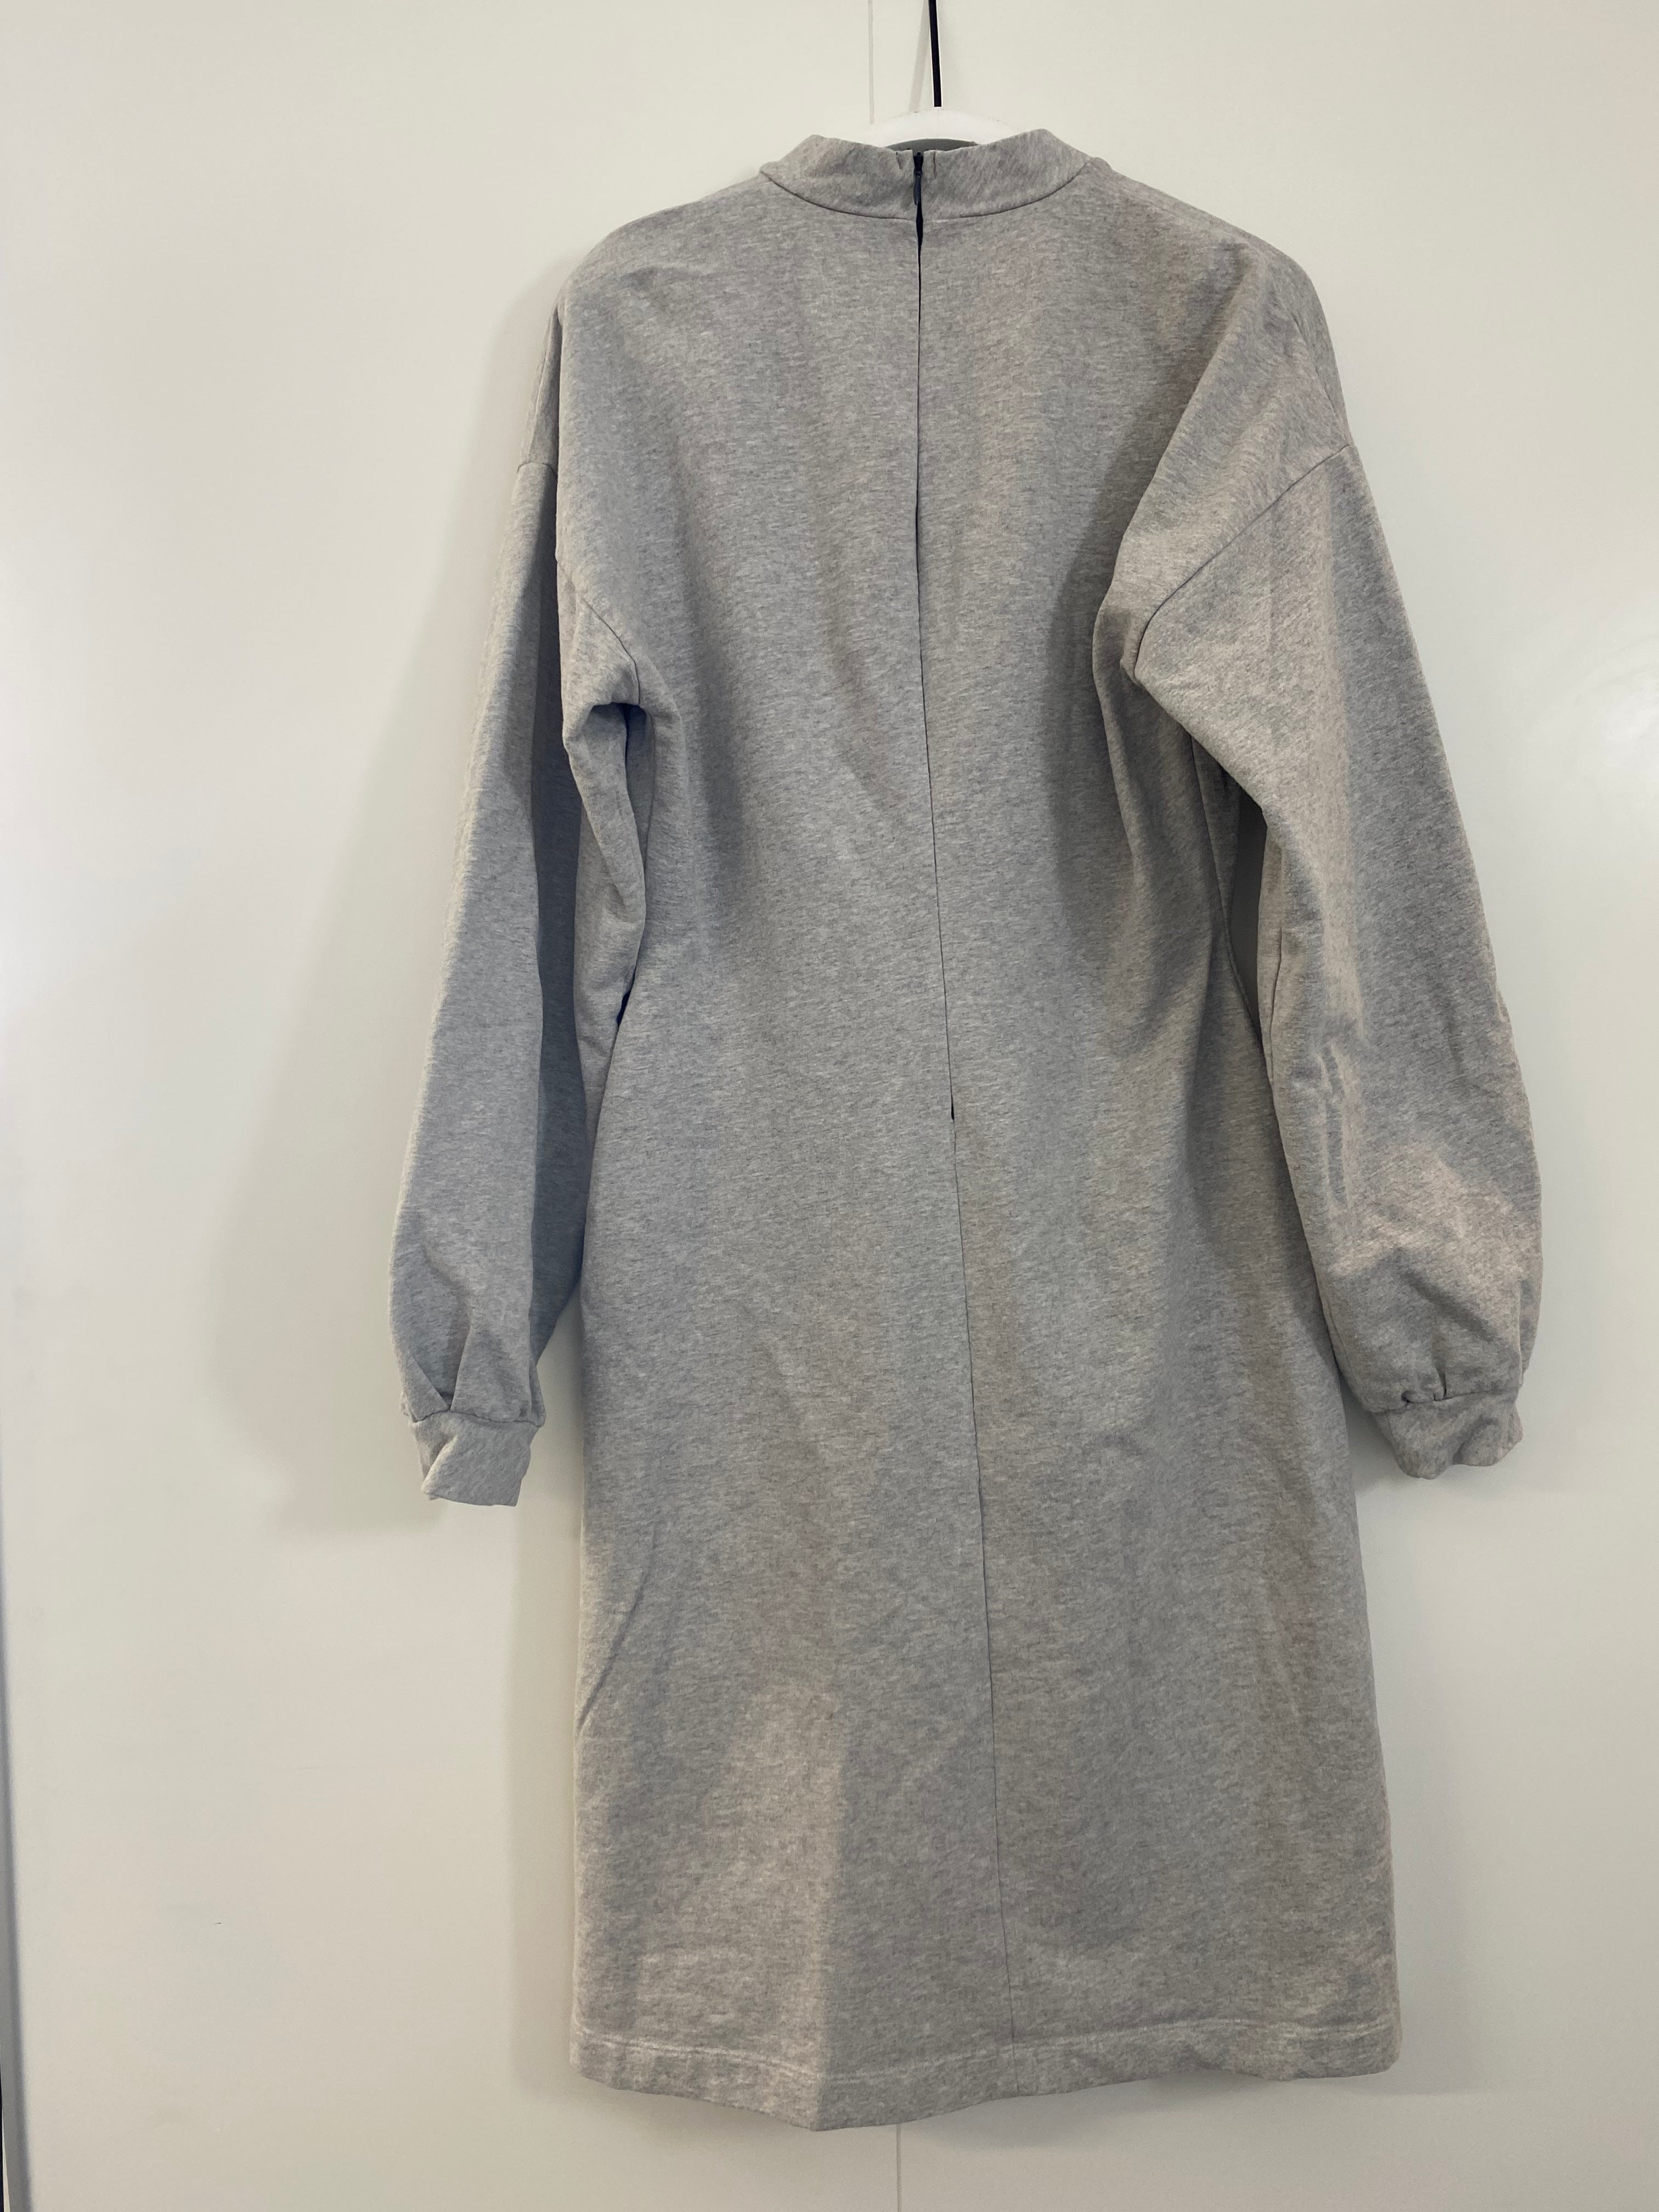 Mavis Dress in Grey Marl Size S